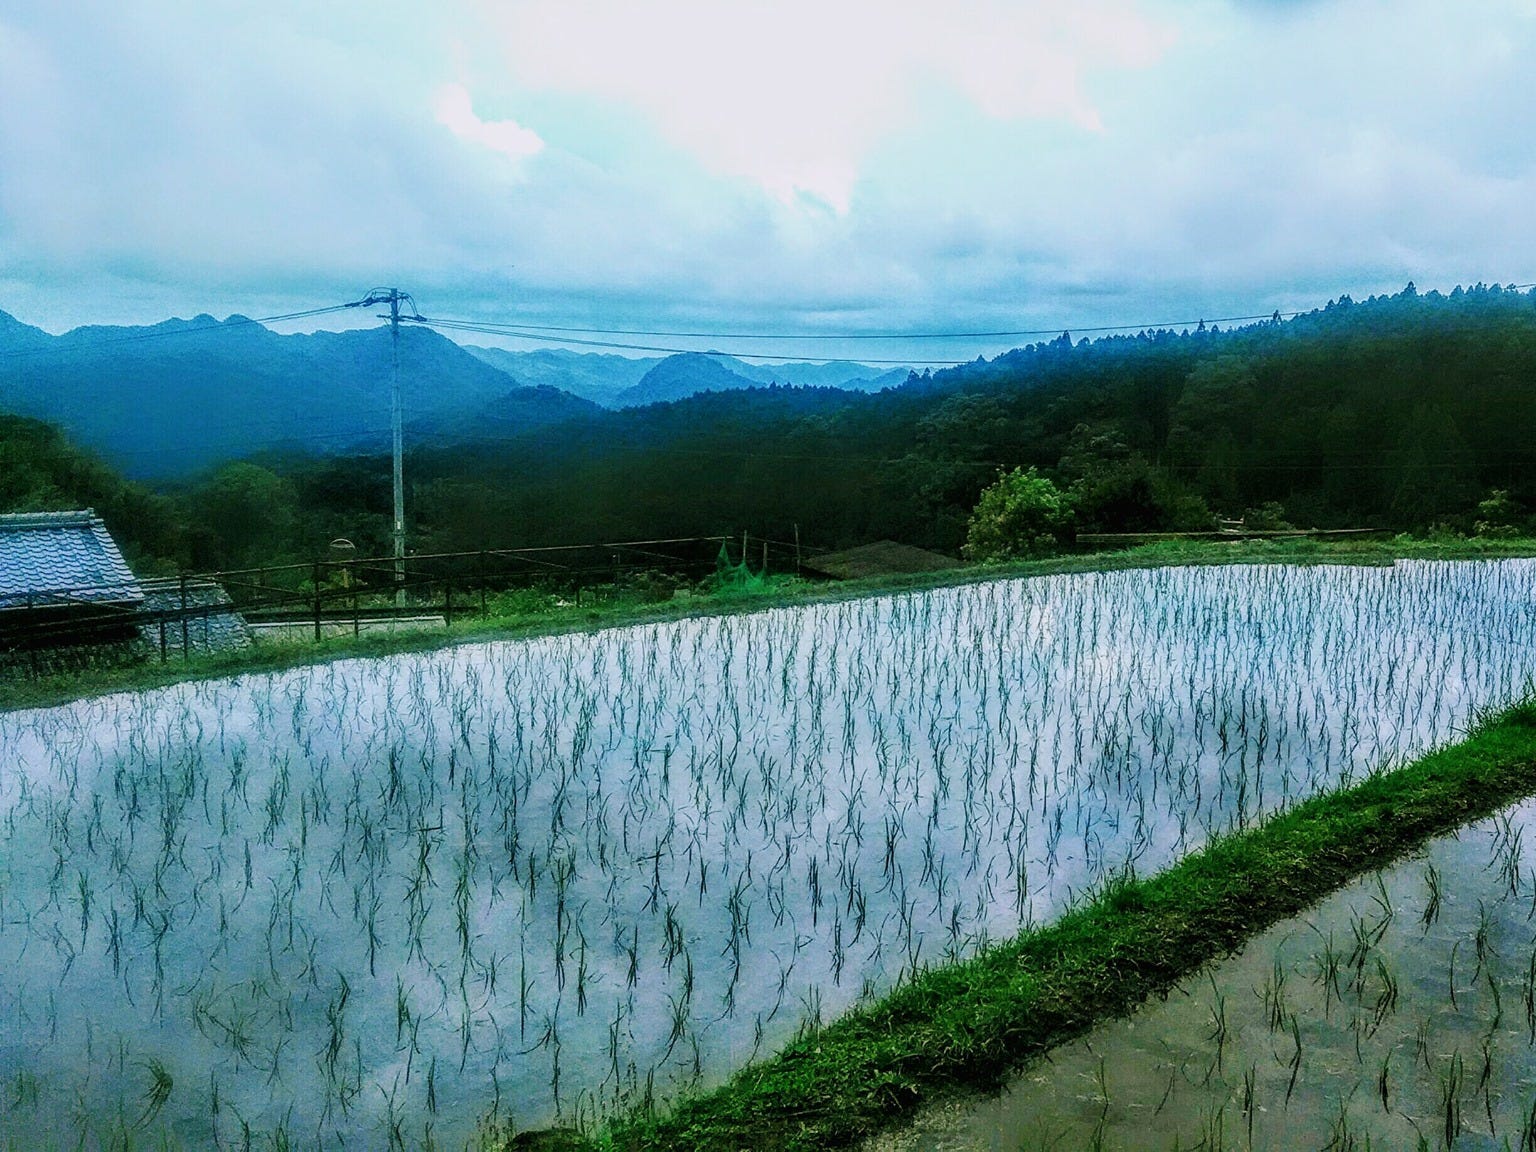 The rice paddy field at dusk outside of the Tokai's akiya